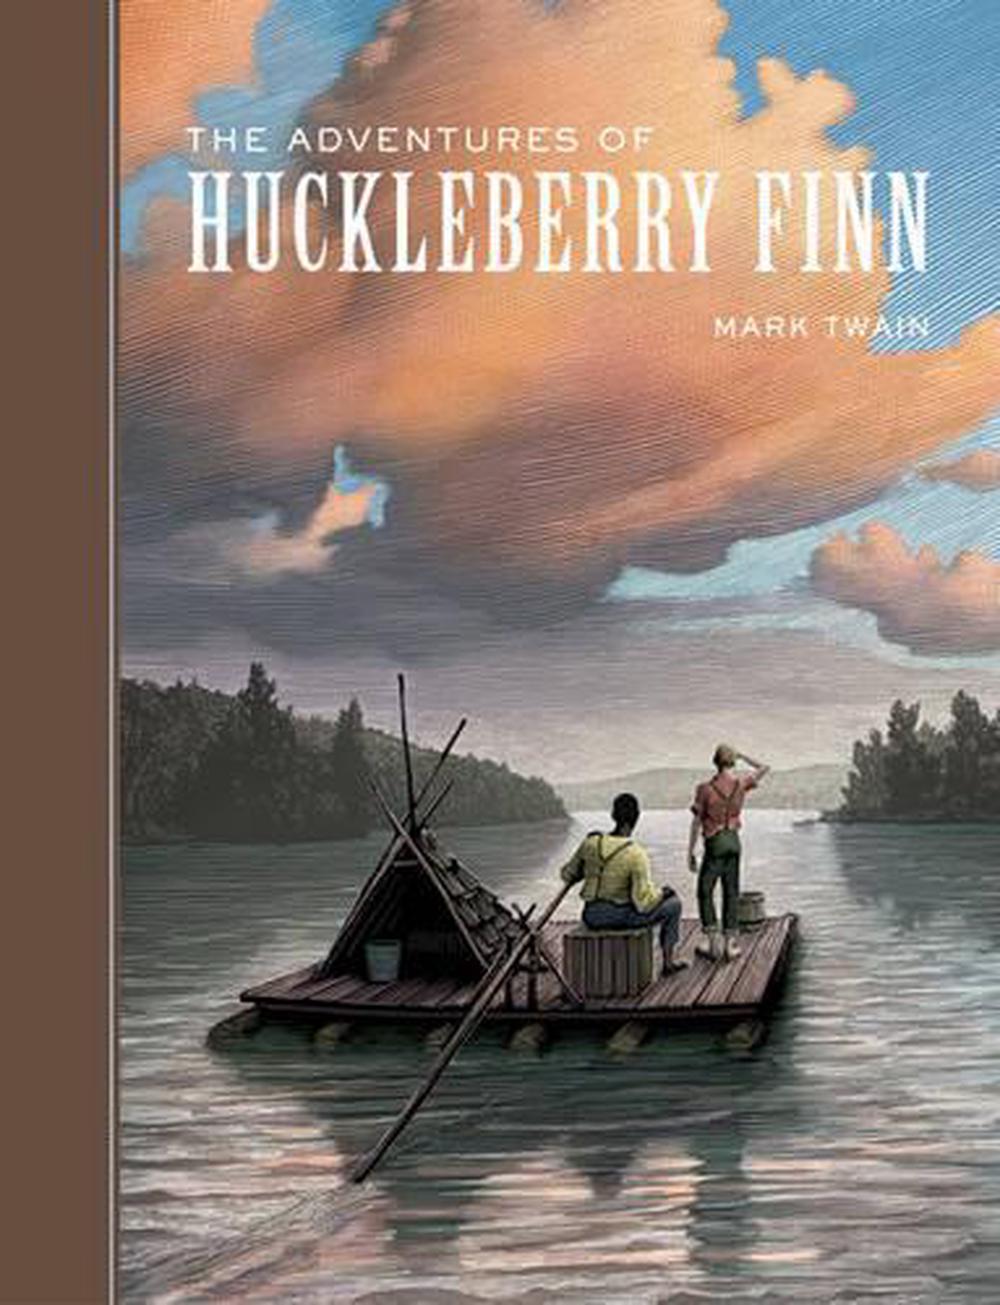 instal the new for ios The Adventures of Huckleberry Finn